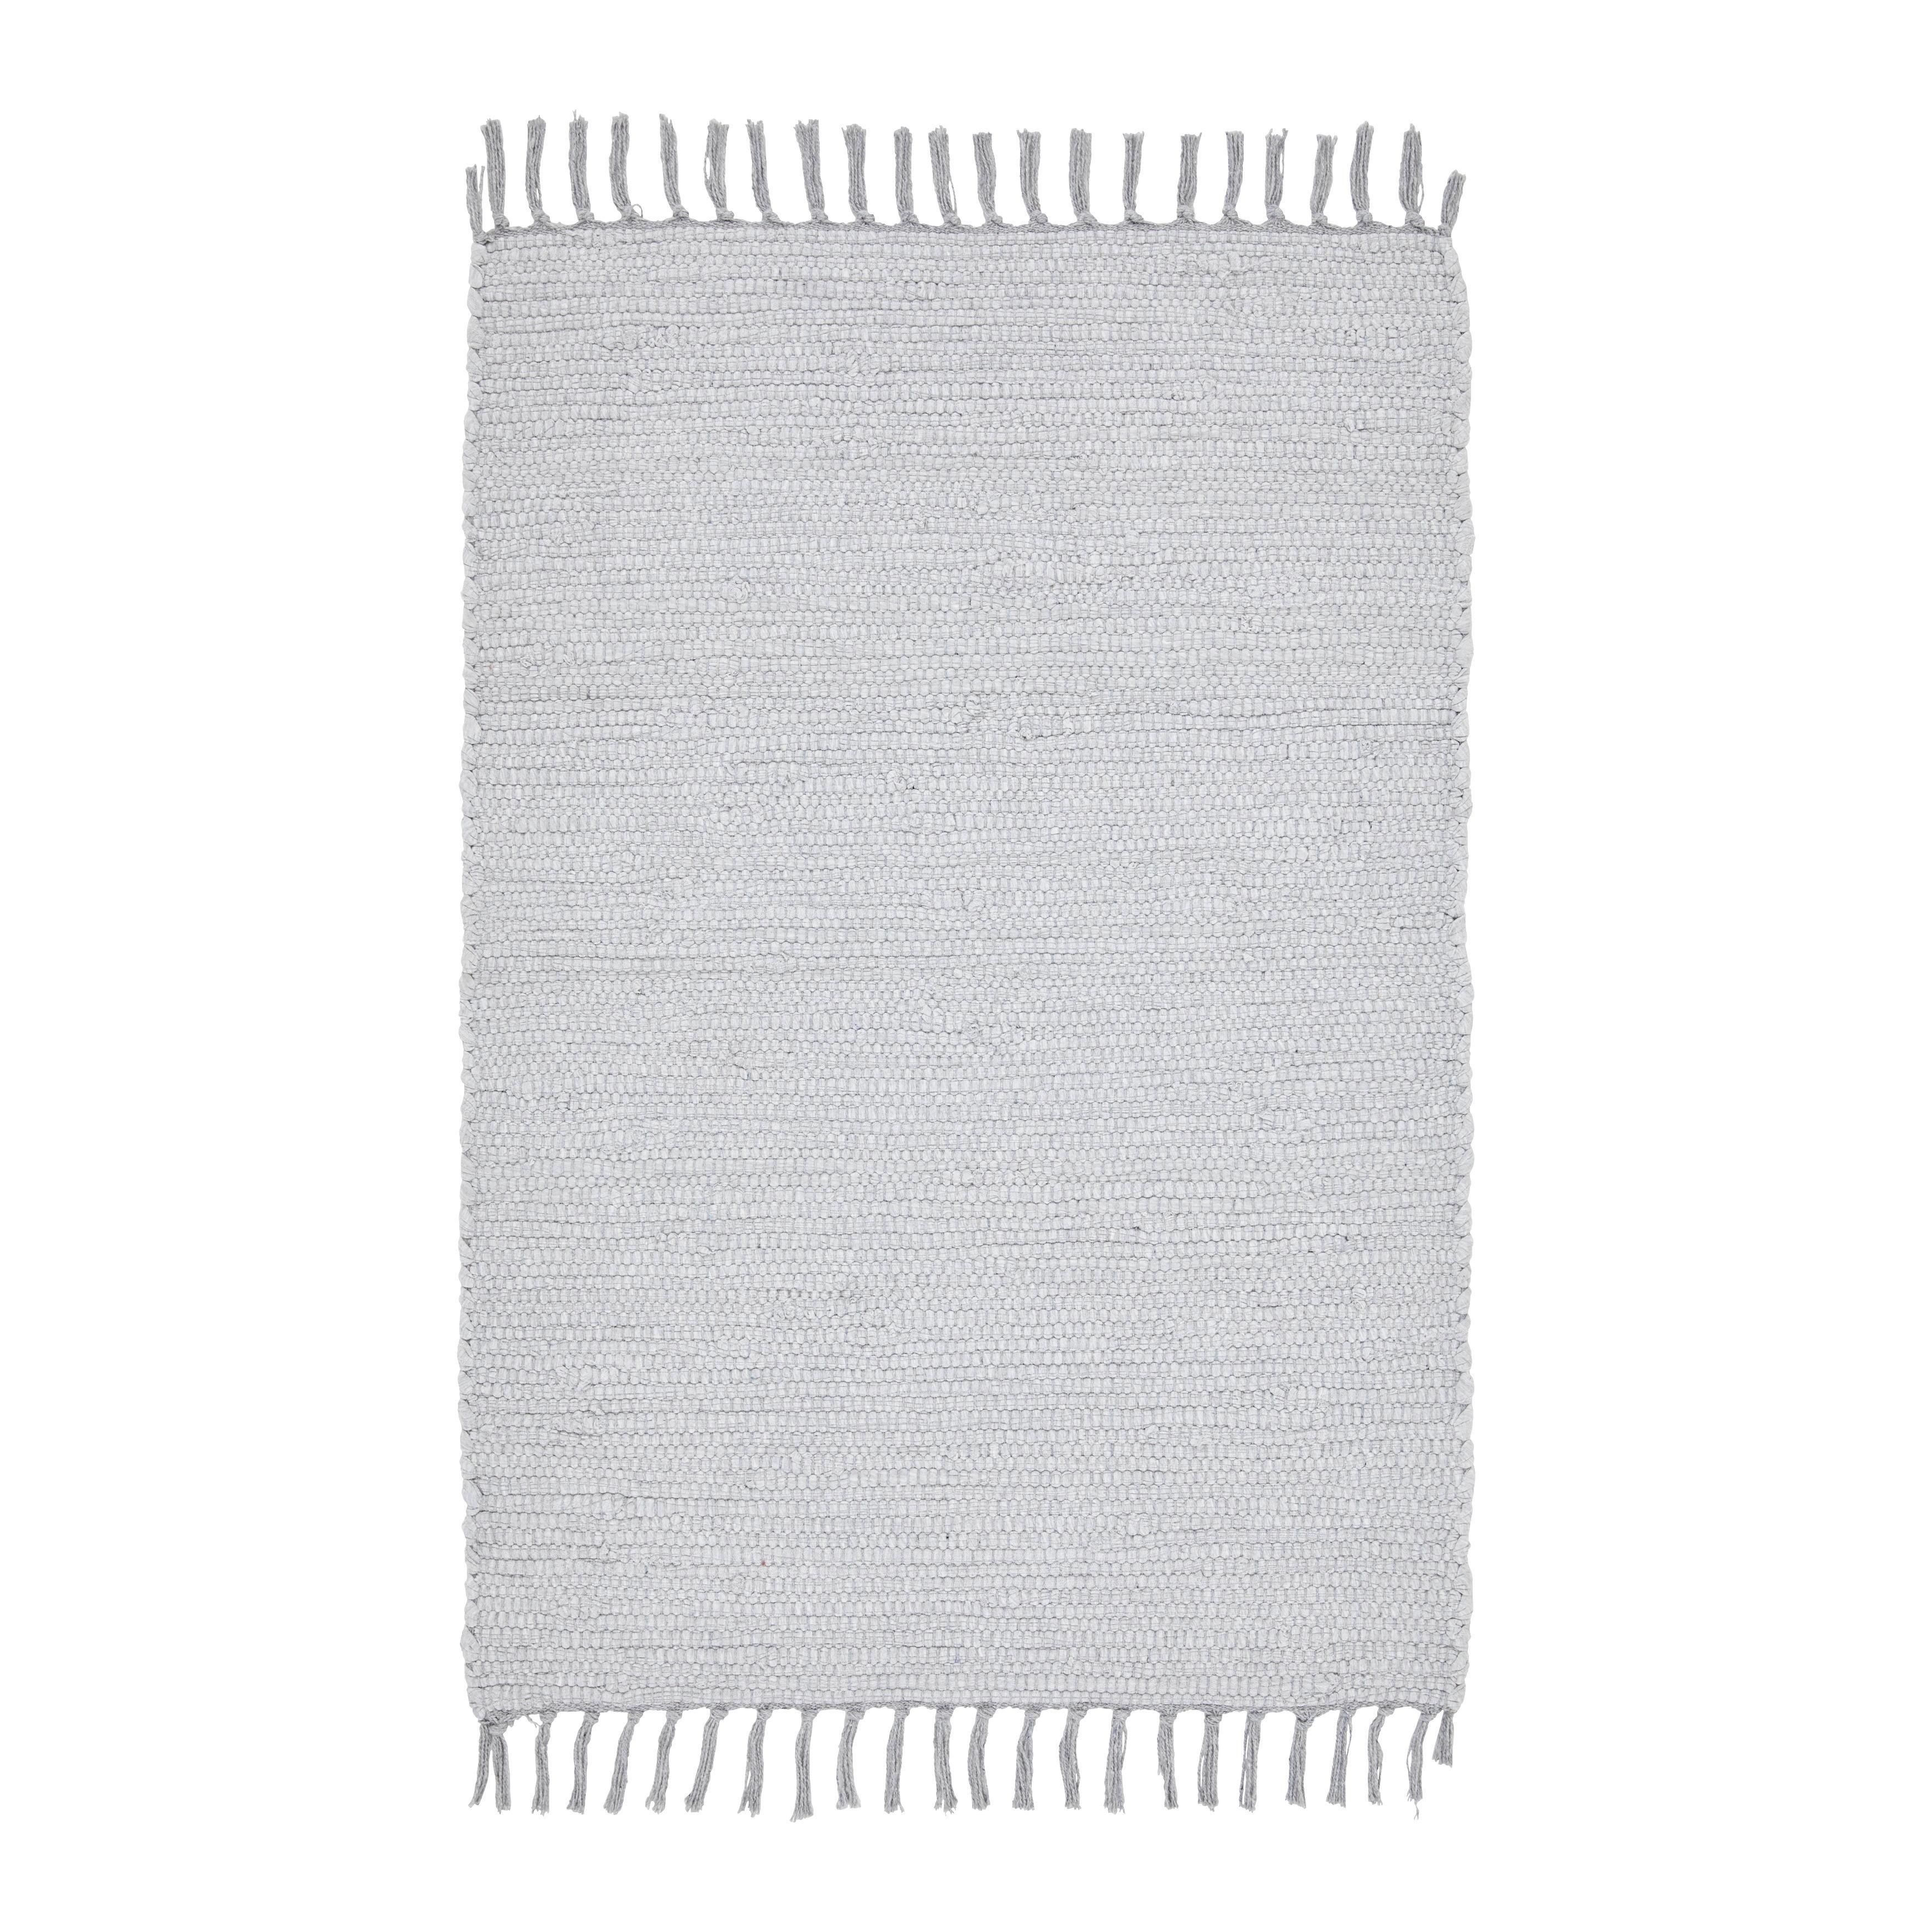 PREPROGA IZ KRP JULIA 1 - srebrne barve/siva, Romantika, tekstil (60/90cm) - Modern Living